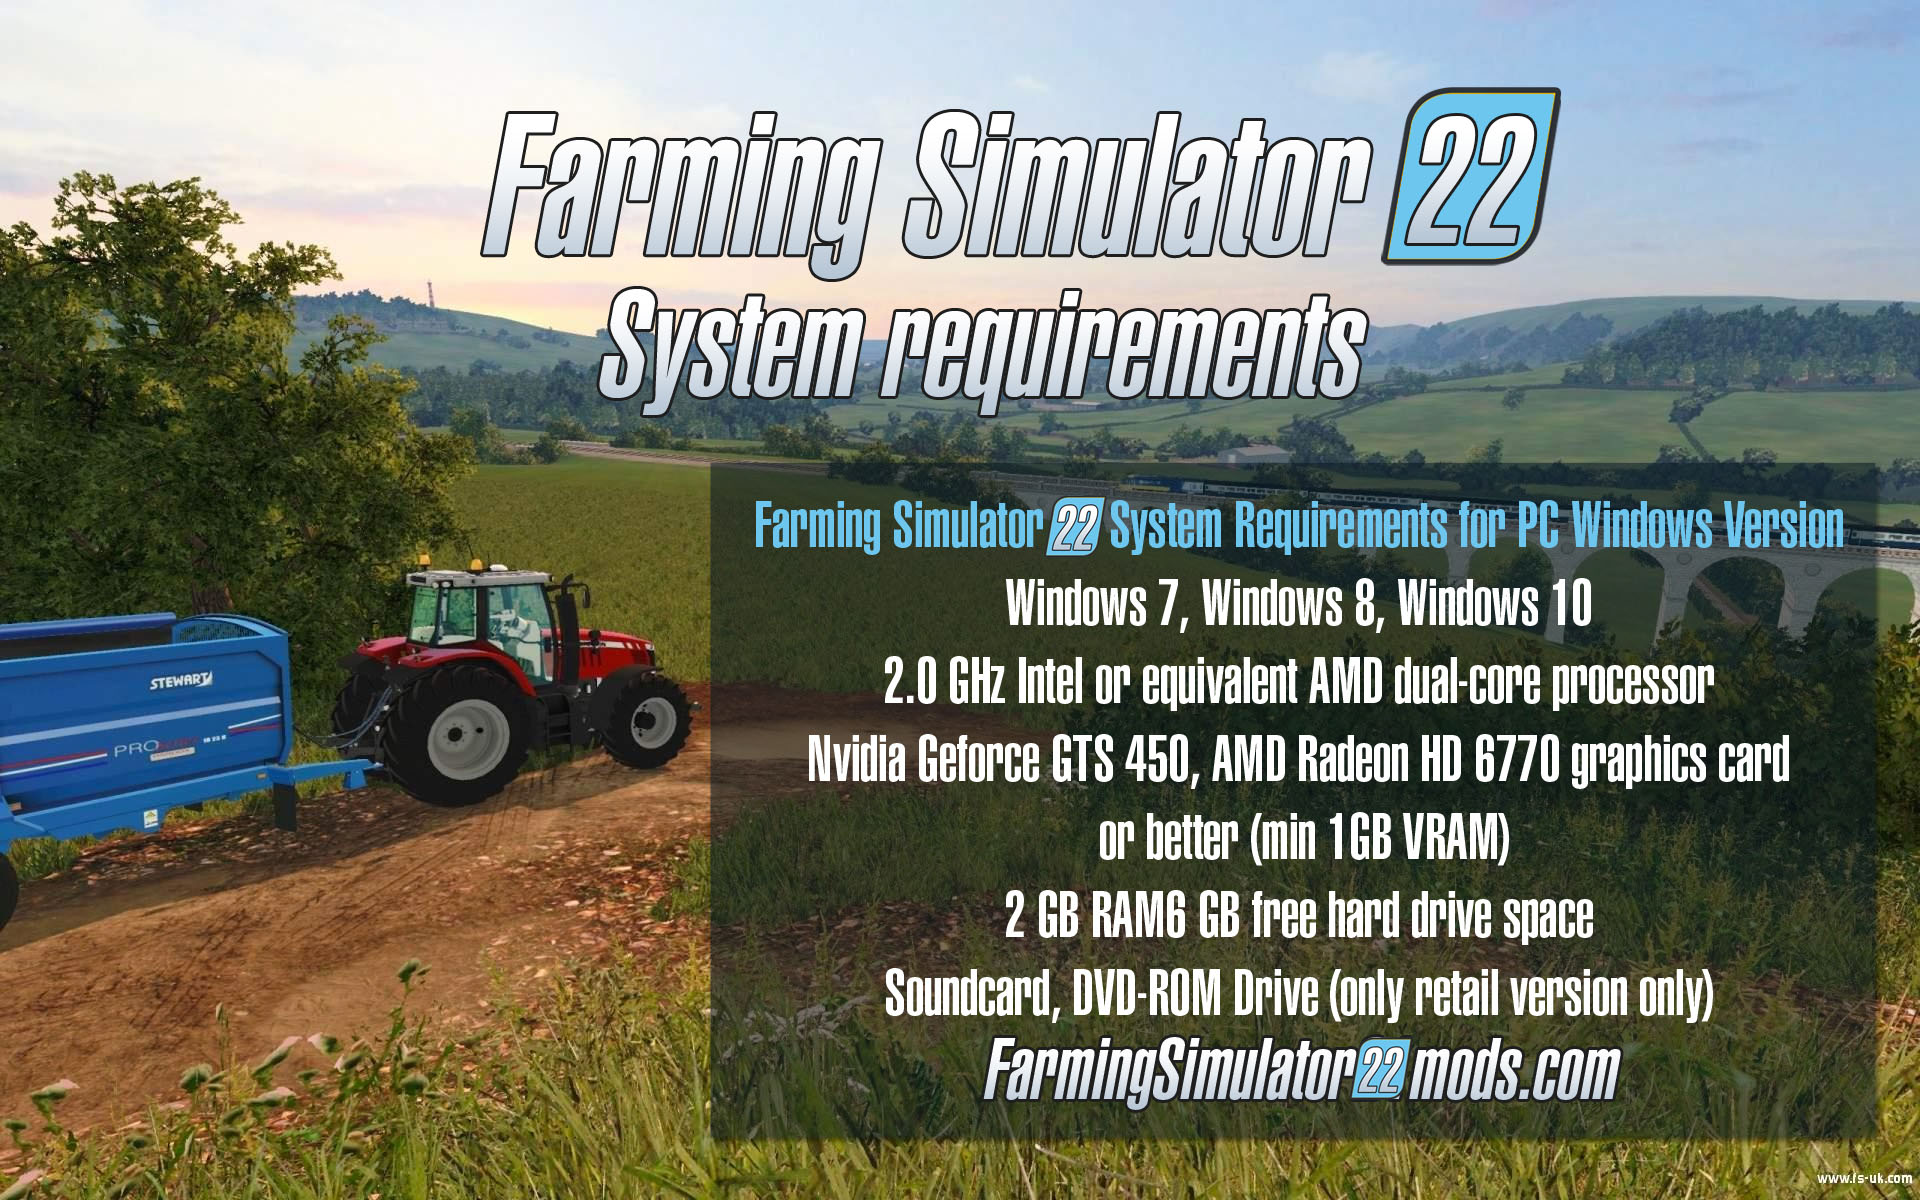 How much RAM does Farming Simulator 22 use?